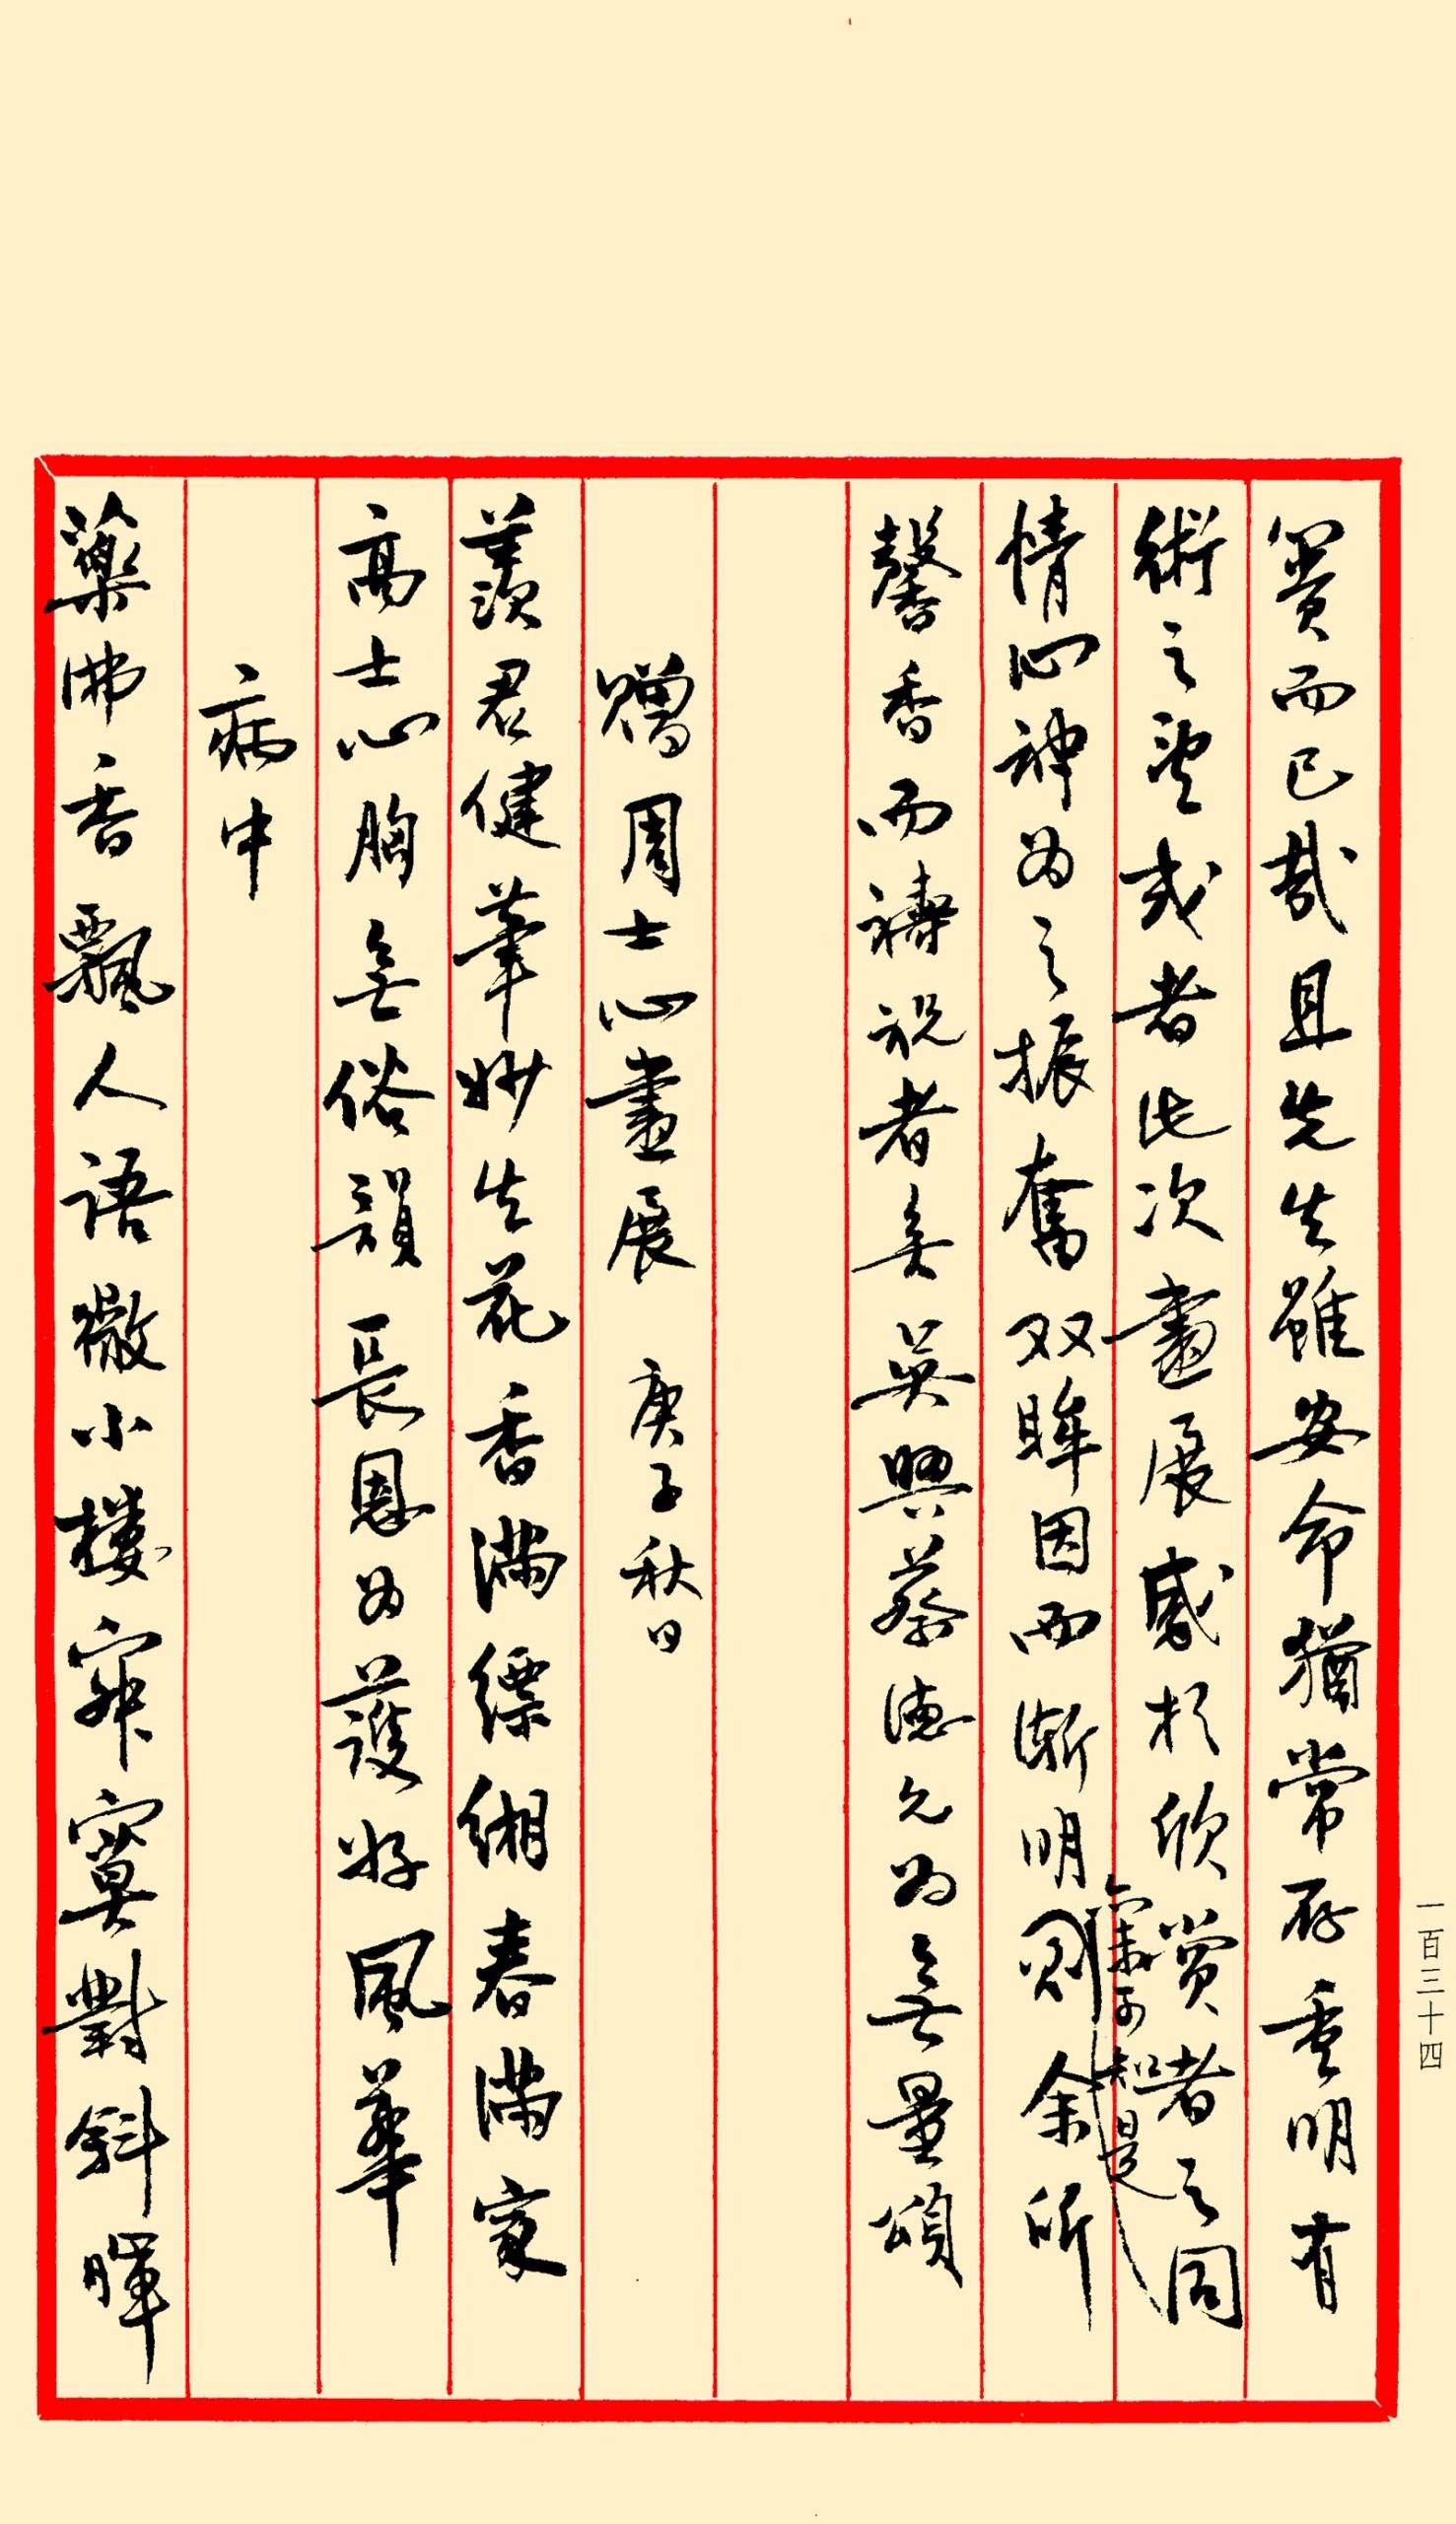 Manuscrit de Cai laoshi, page 4